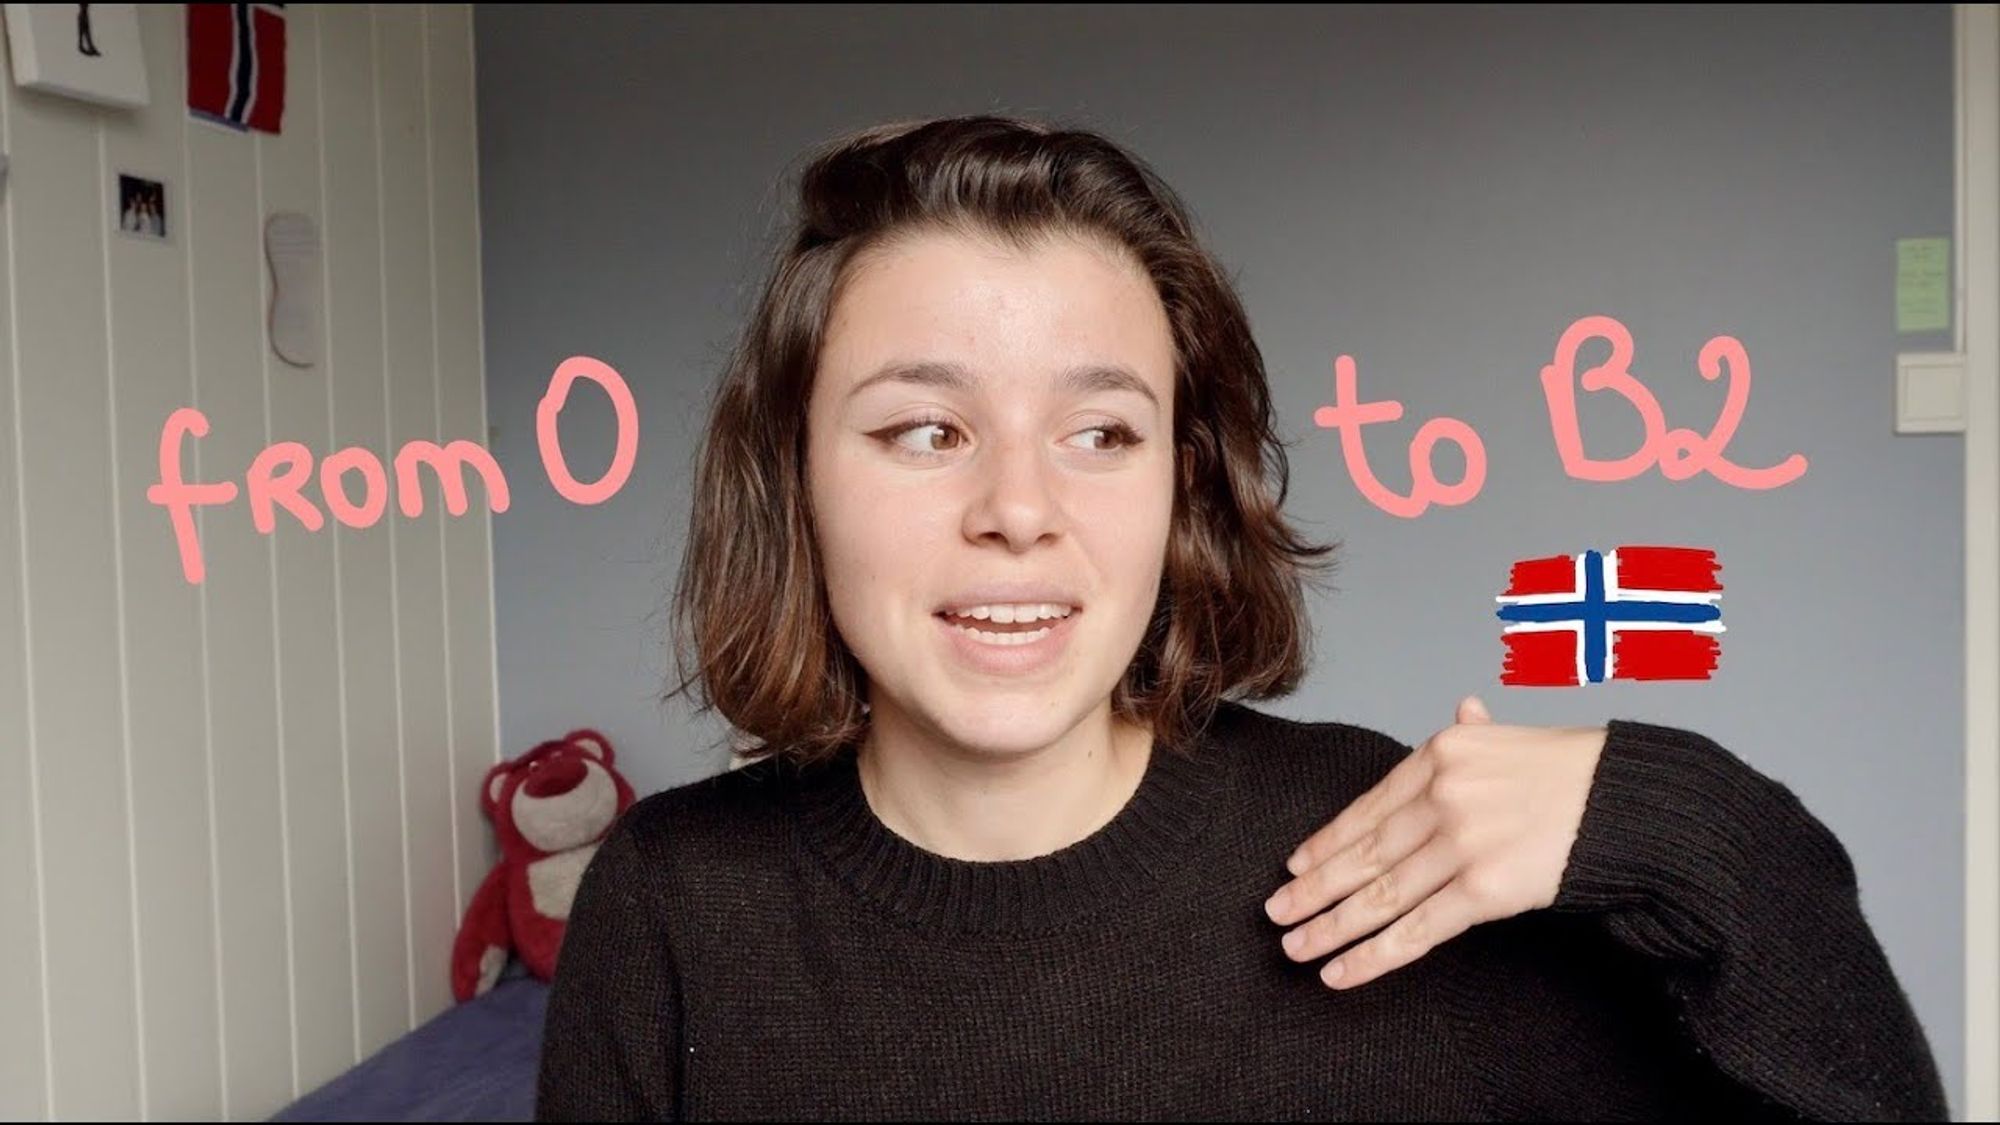 How I learnt Norwegian on my own